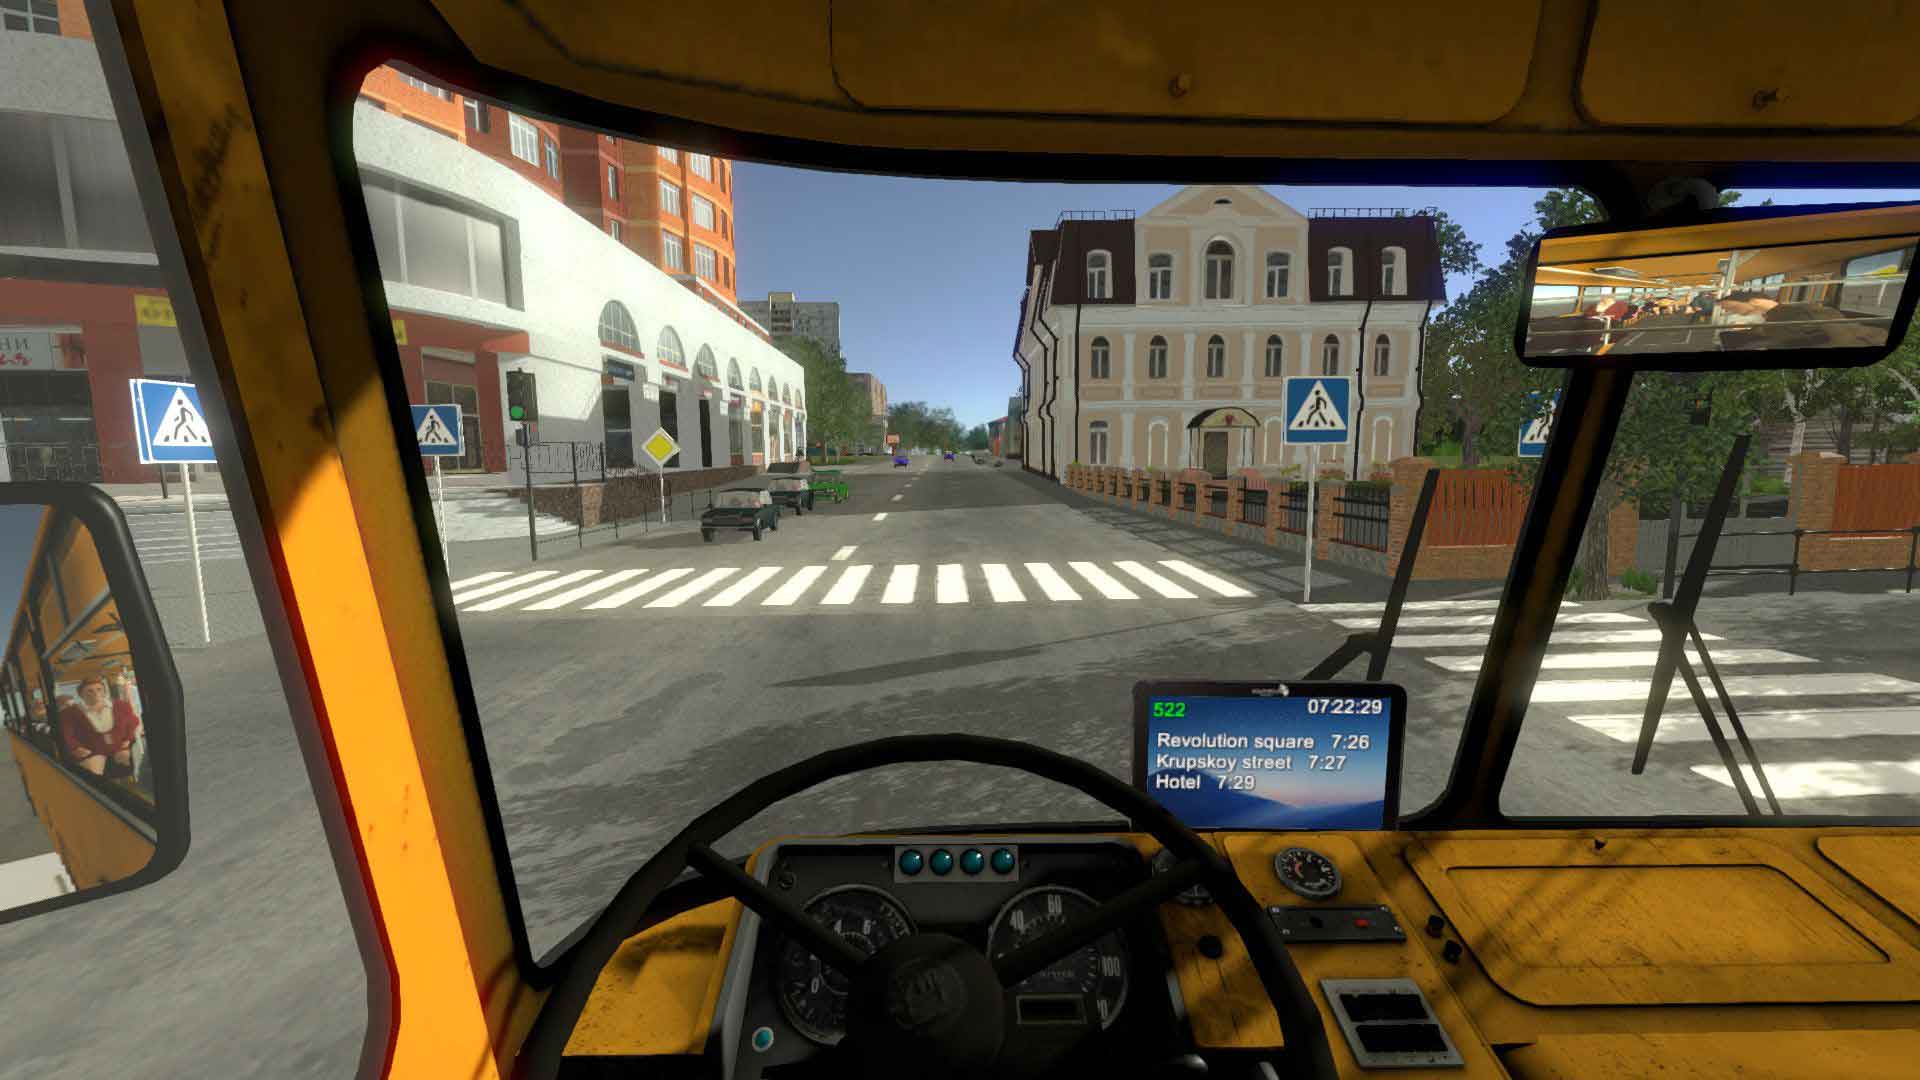 download tourist bus simulator full cracked